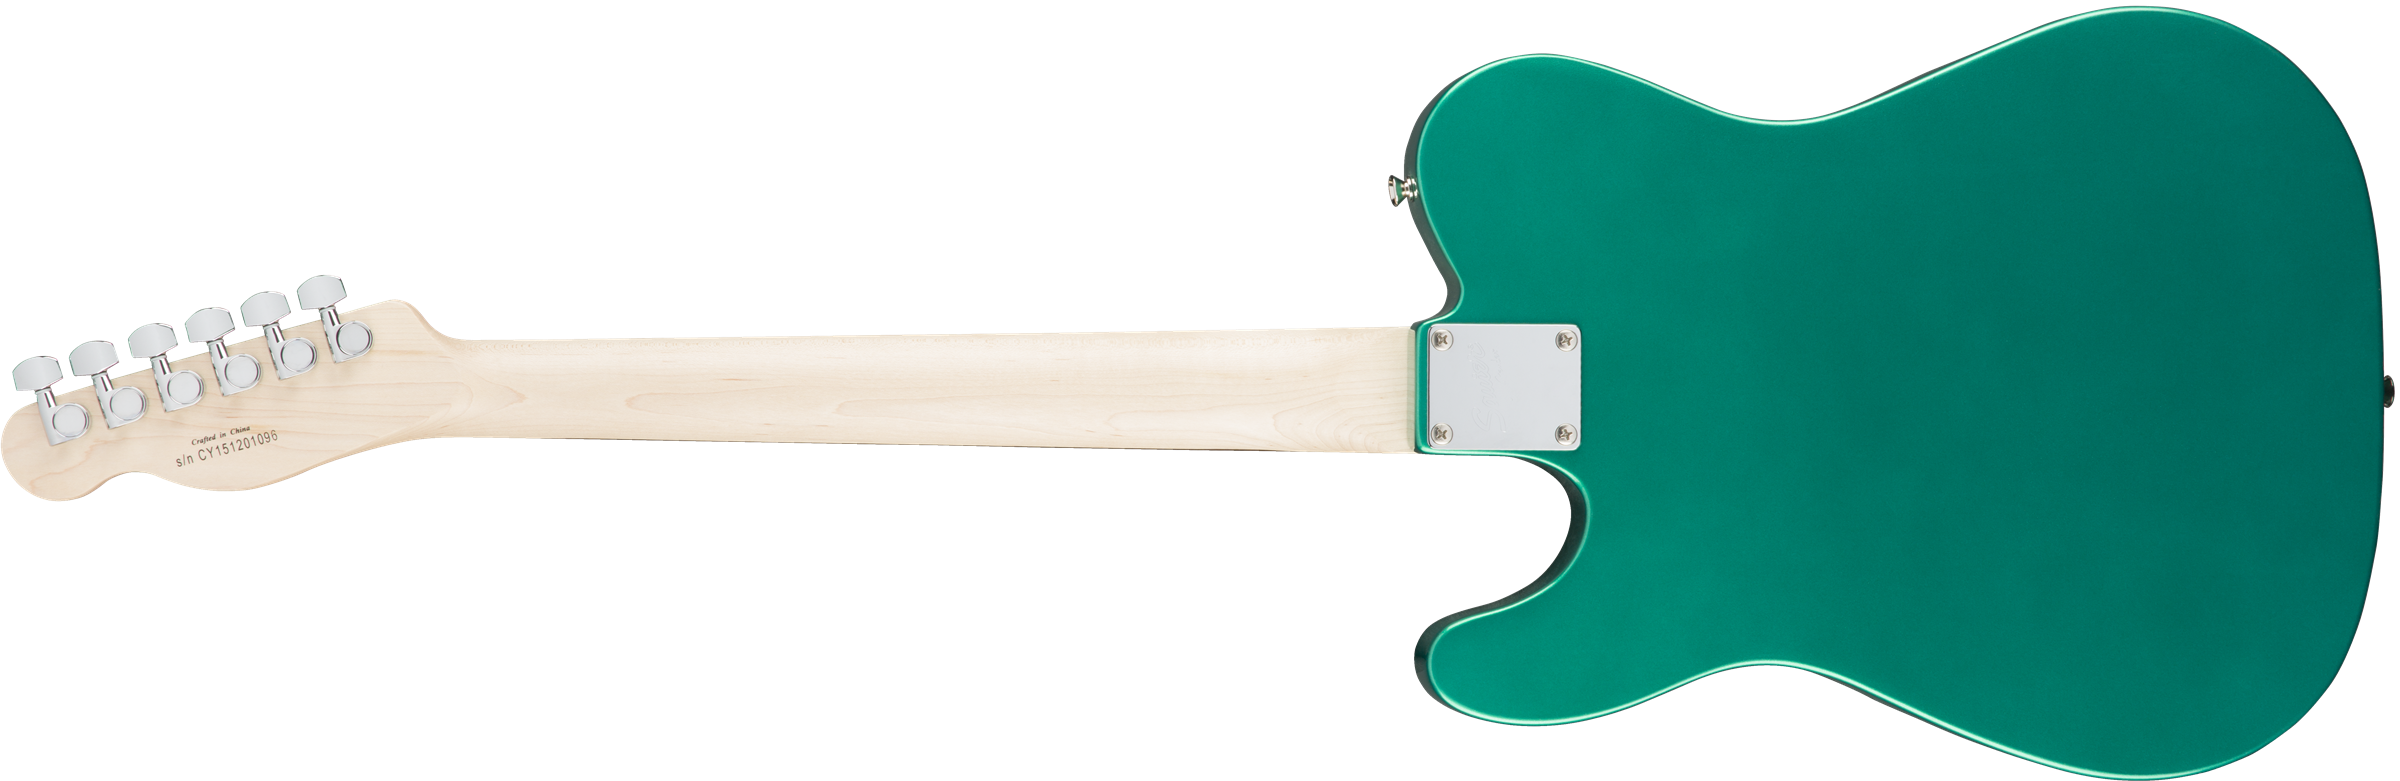 Squier Tele Affinity Series 2019 Lau - Race Green - Televorm elektrische gitaar - Variation 5